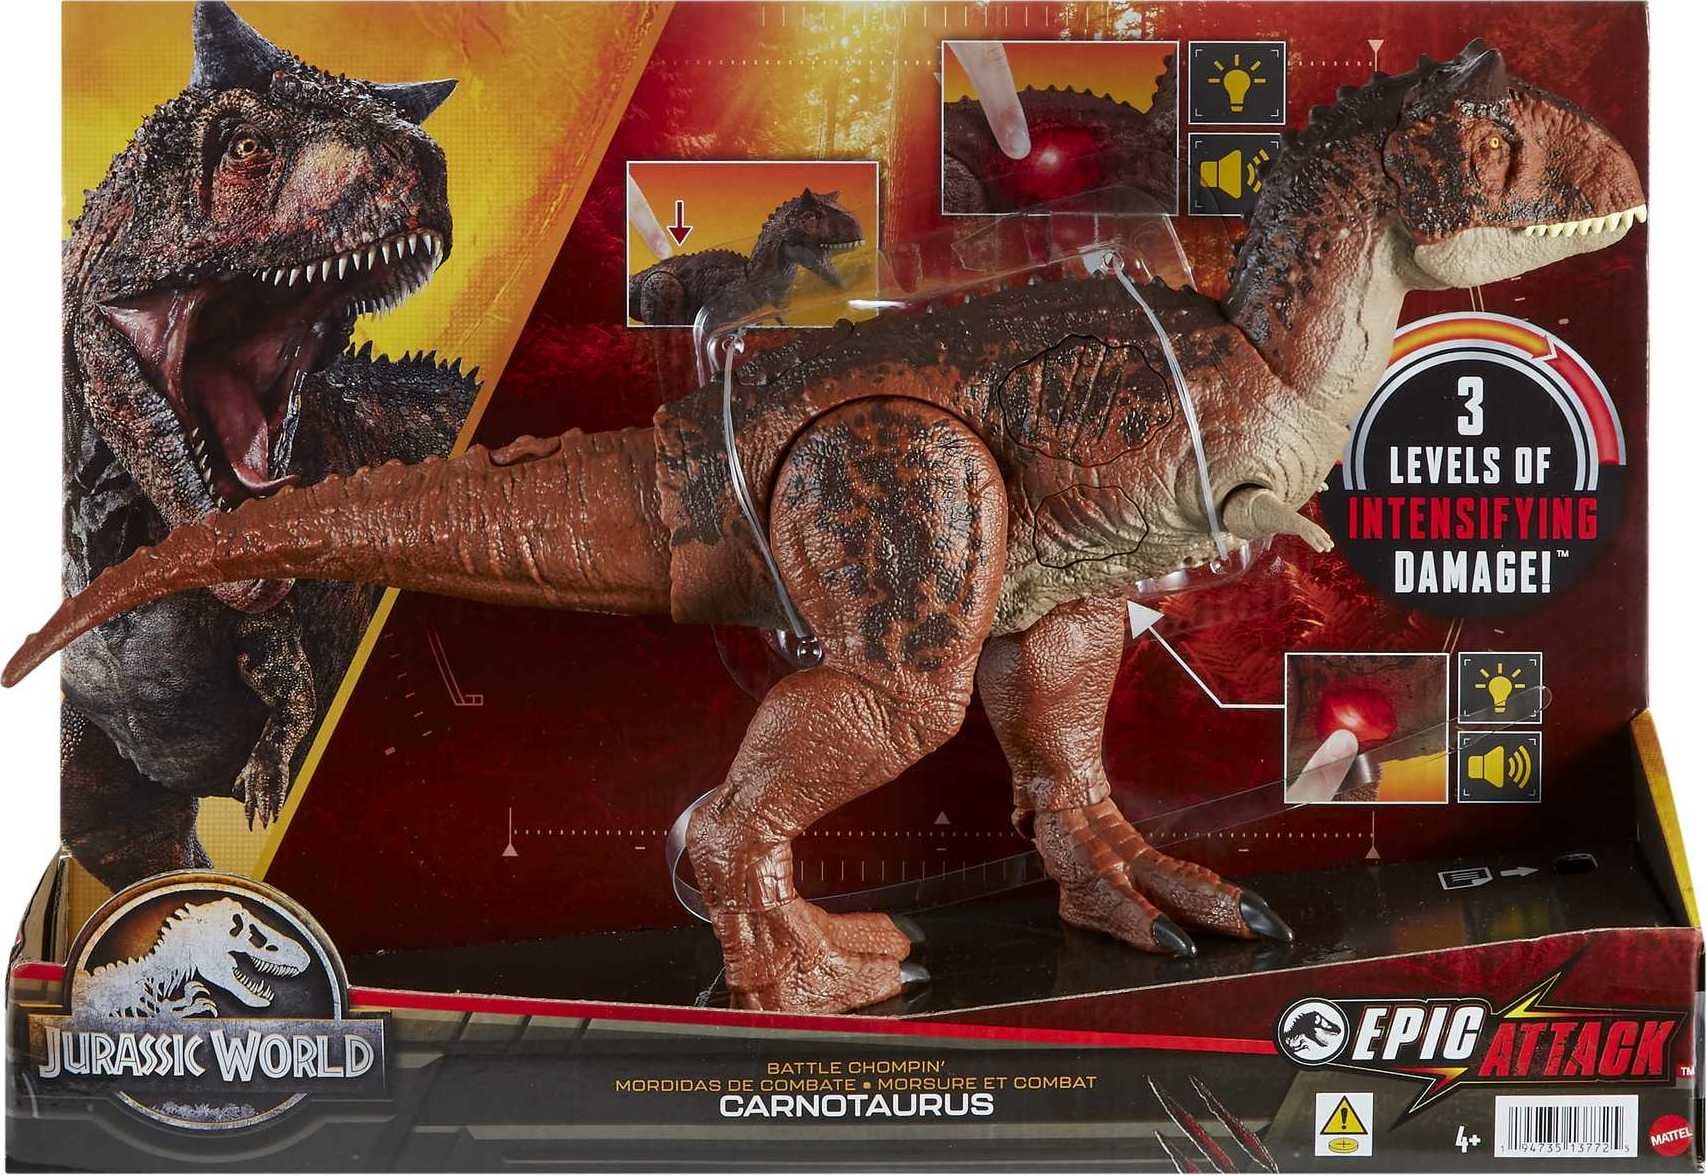 Jurassic World: Fallen Kingdom Dinosaur Toy Epic Attack Carnotaurus 